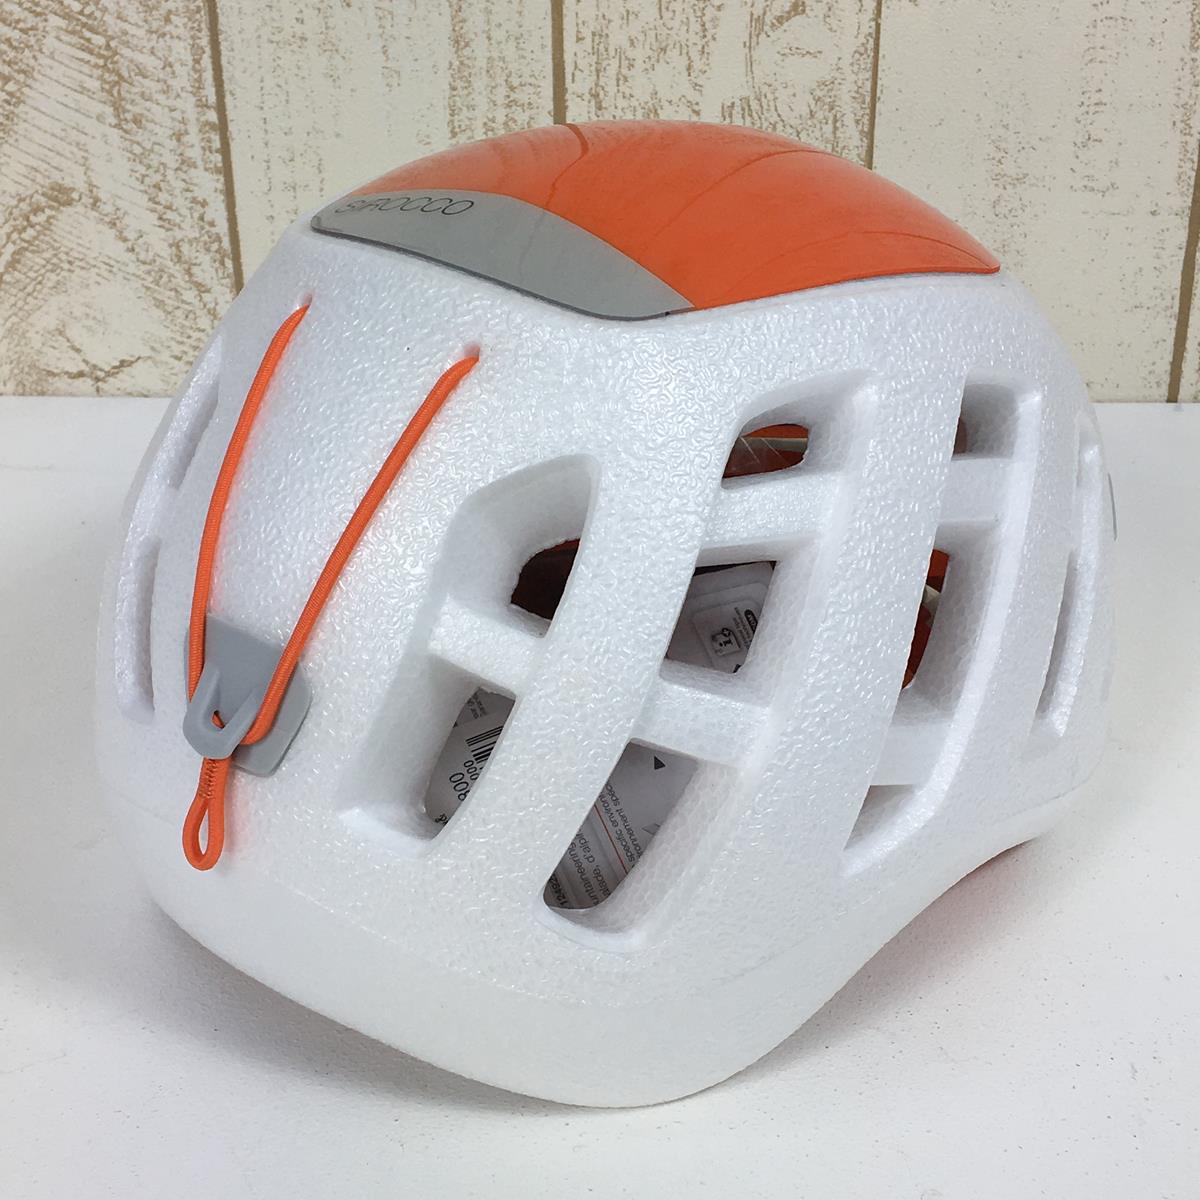 【M/L】 ペツル シロッコ SIROCCO 山岳ヘルメット PETZL A073/A073AA01 White / Orange ホワイト系